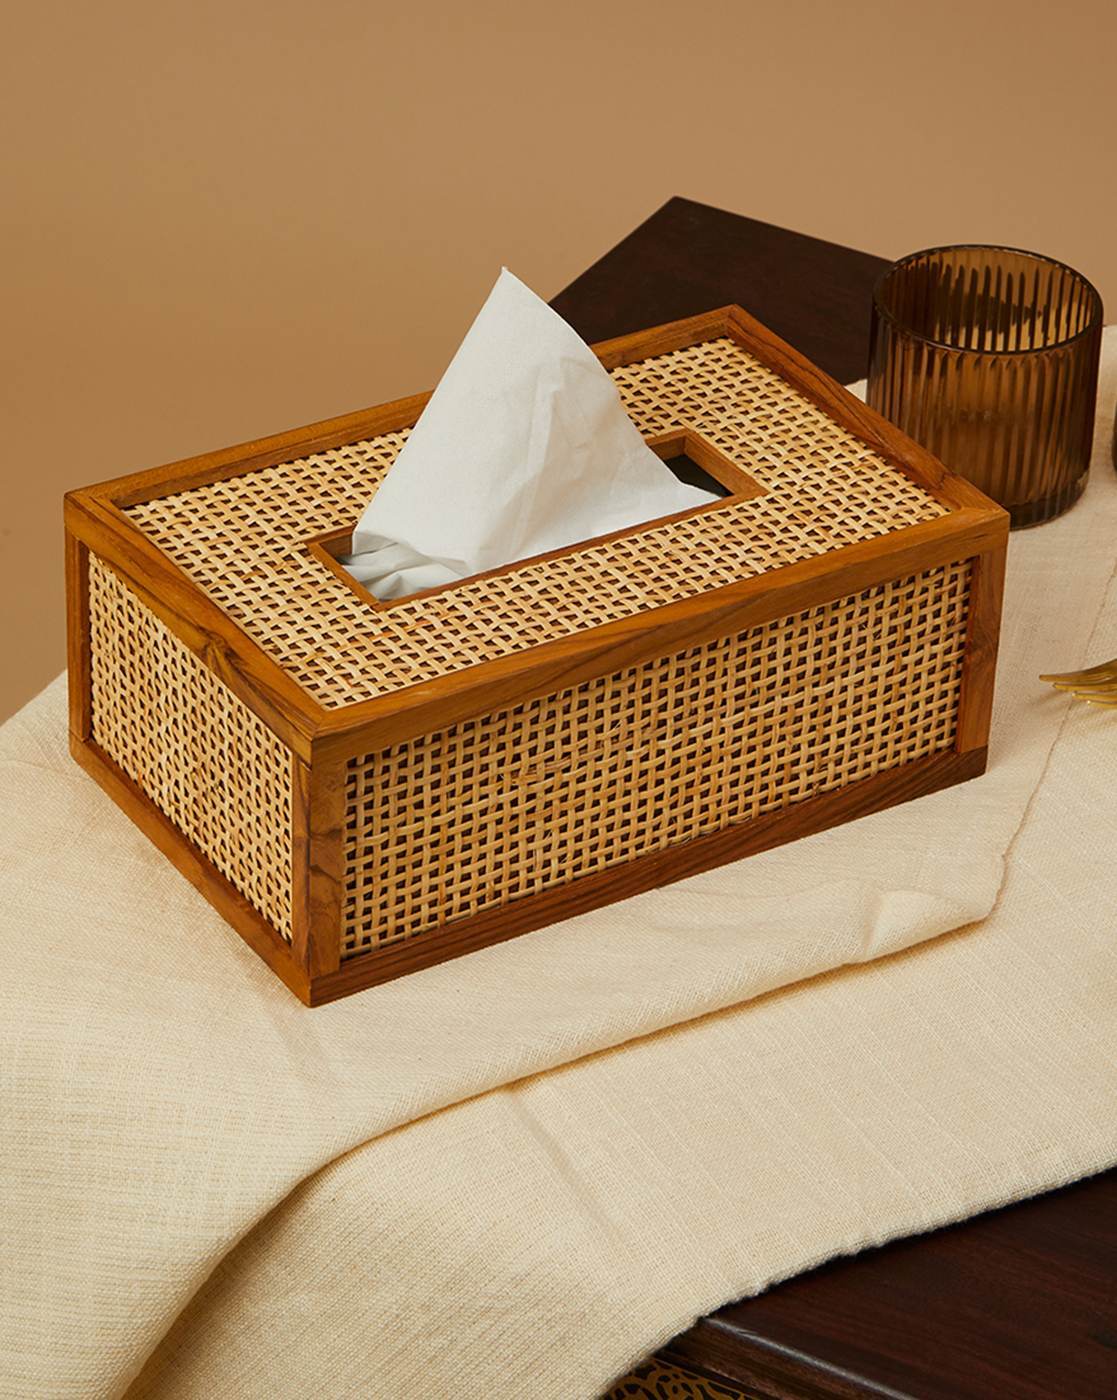 Baoblaze Ceramic Tissue Box Holder Tissue Paper Storage Holder for Home Kitchen Decor Beige, Size: 22.2cmx10.7cmx13.5cm